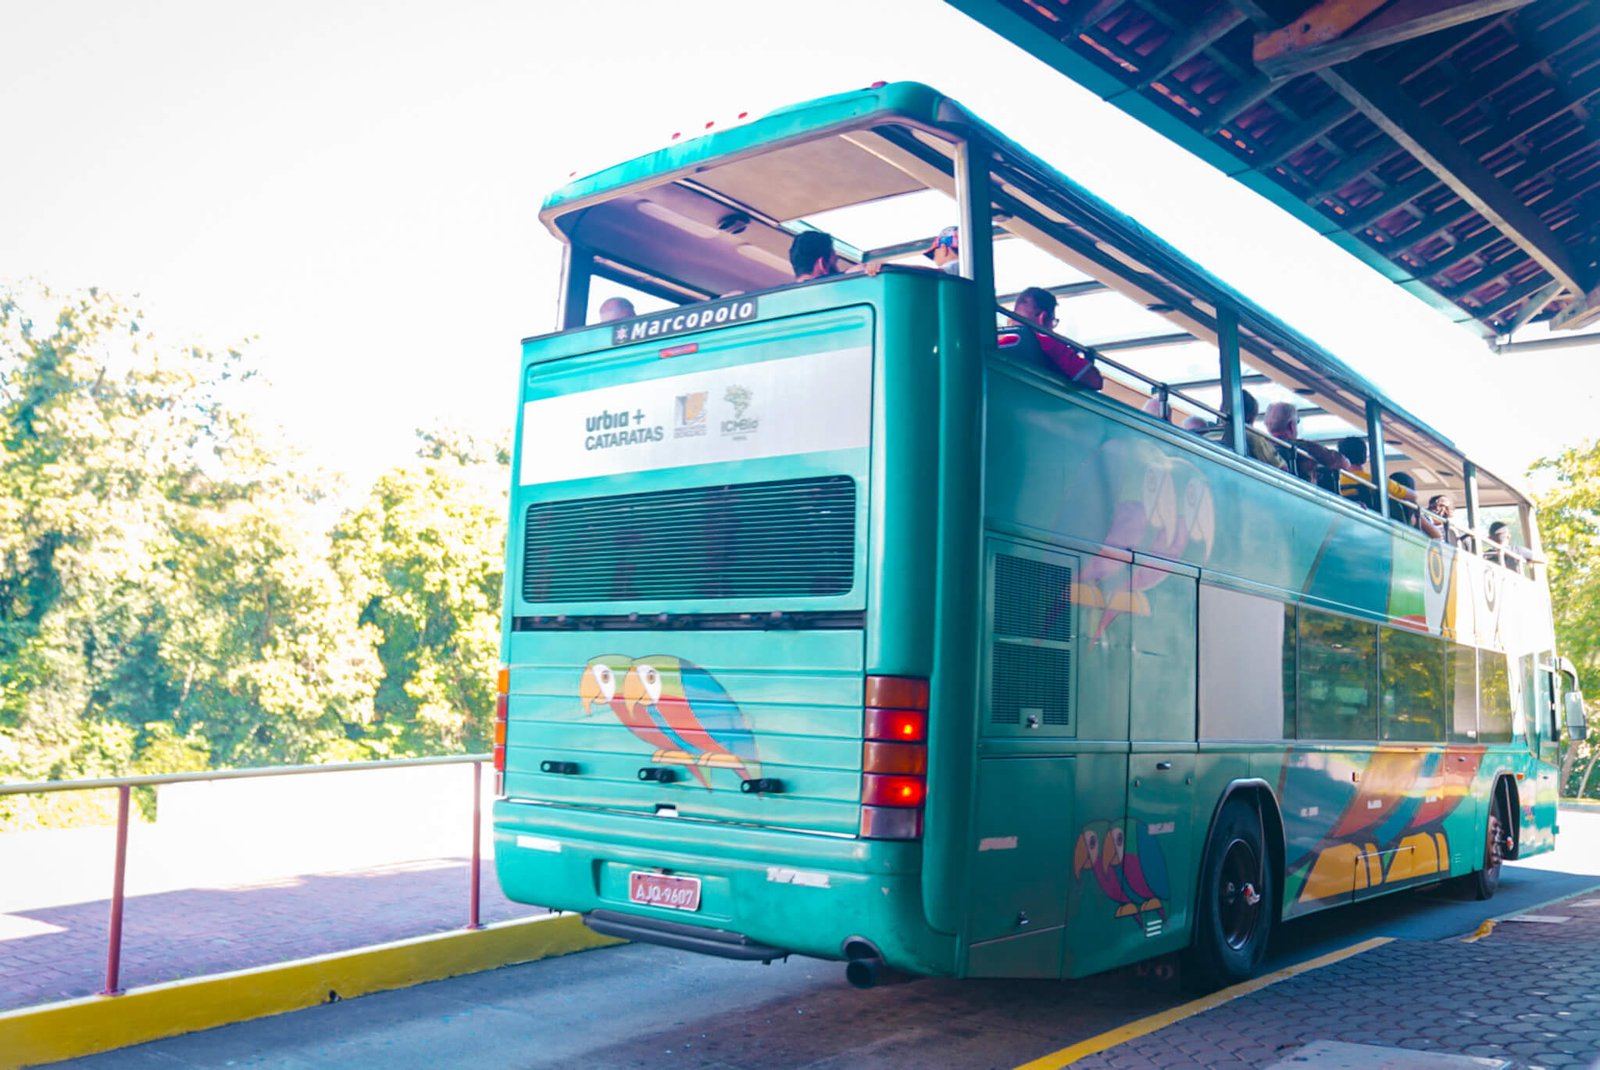 Bus on the Brazil side of Iguazu Falls